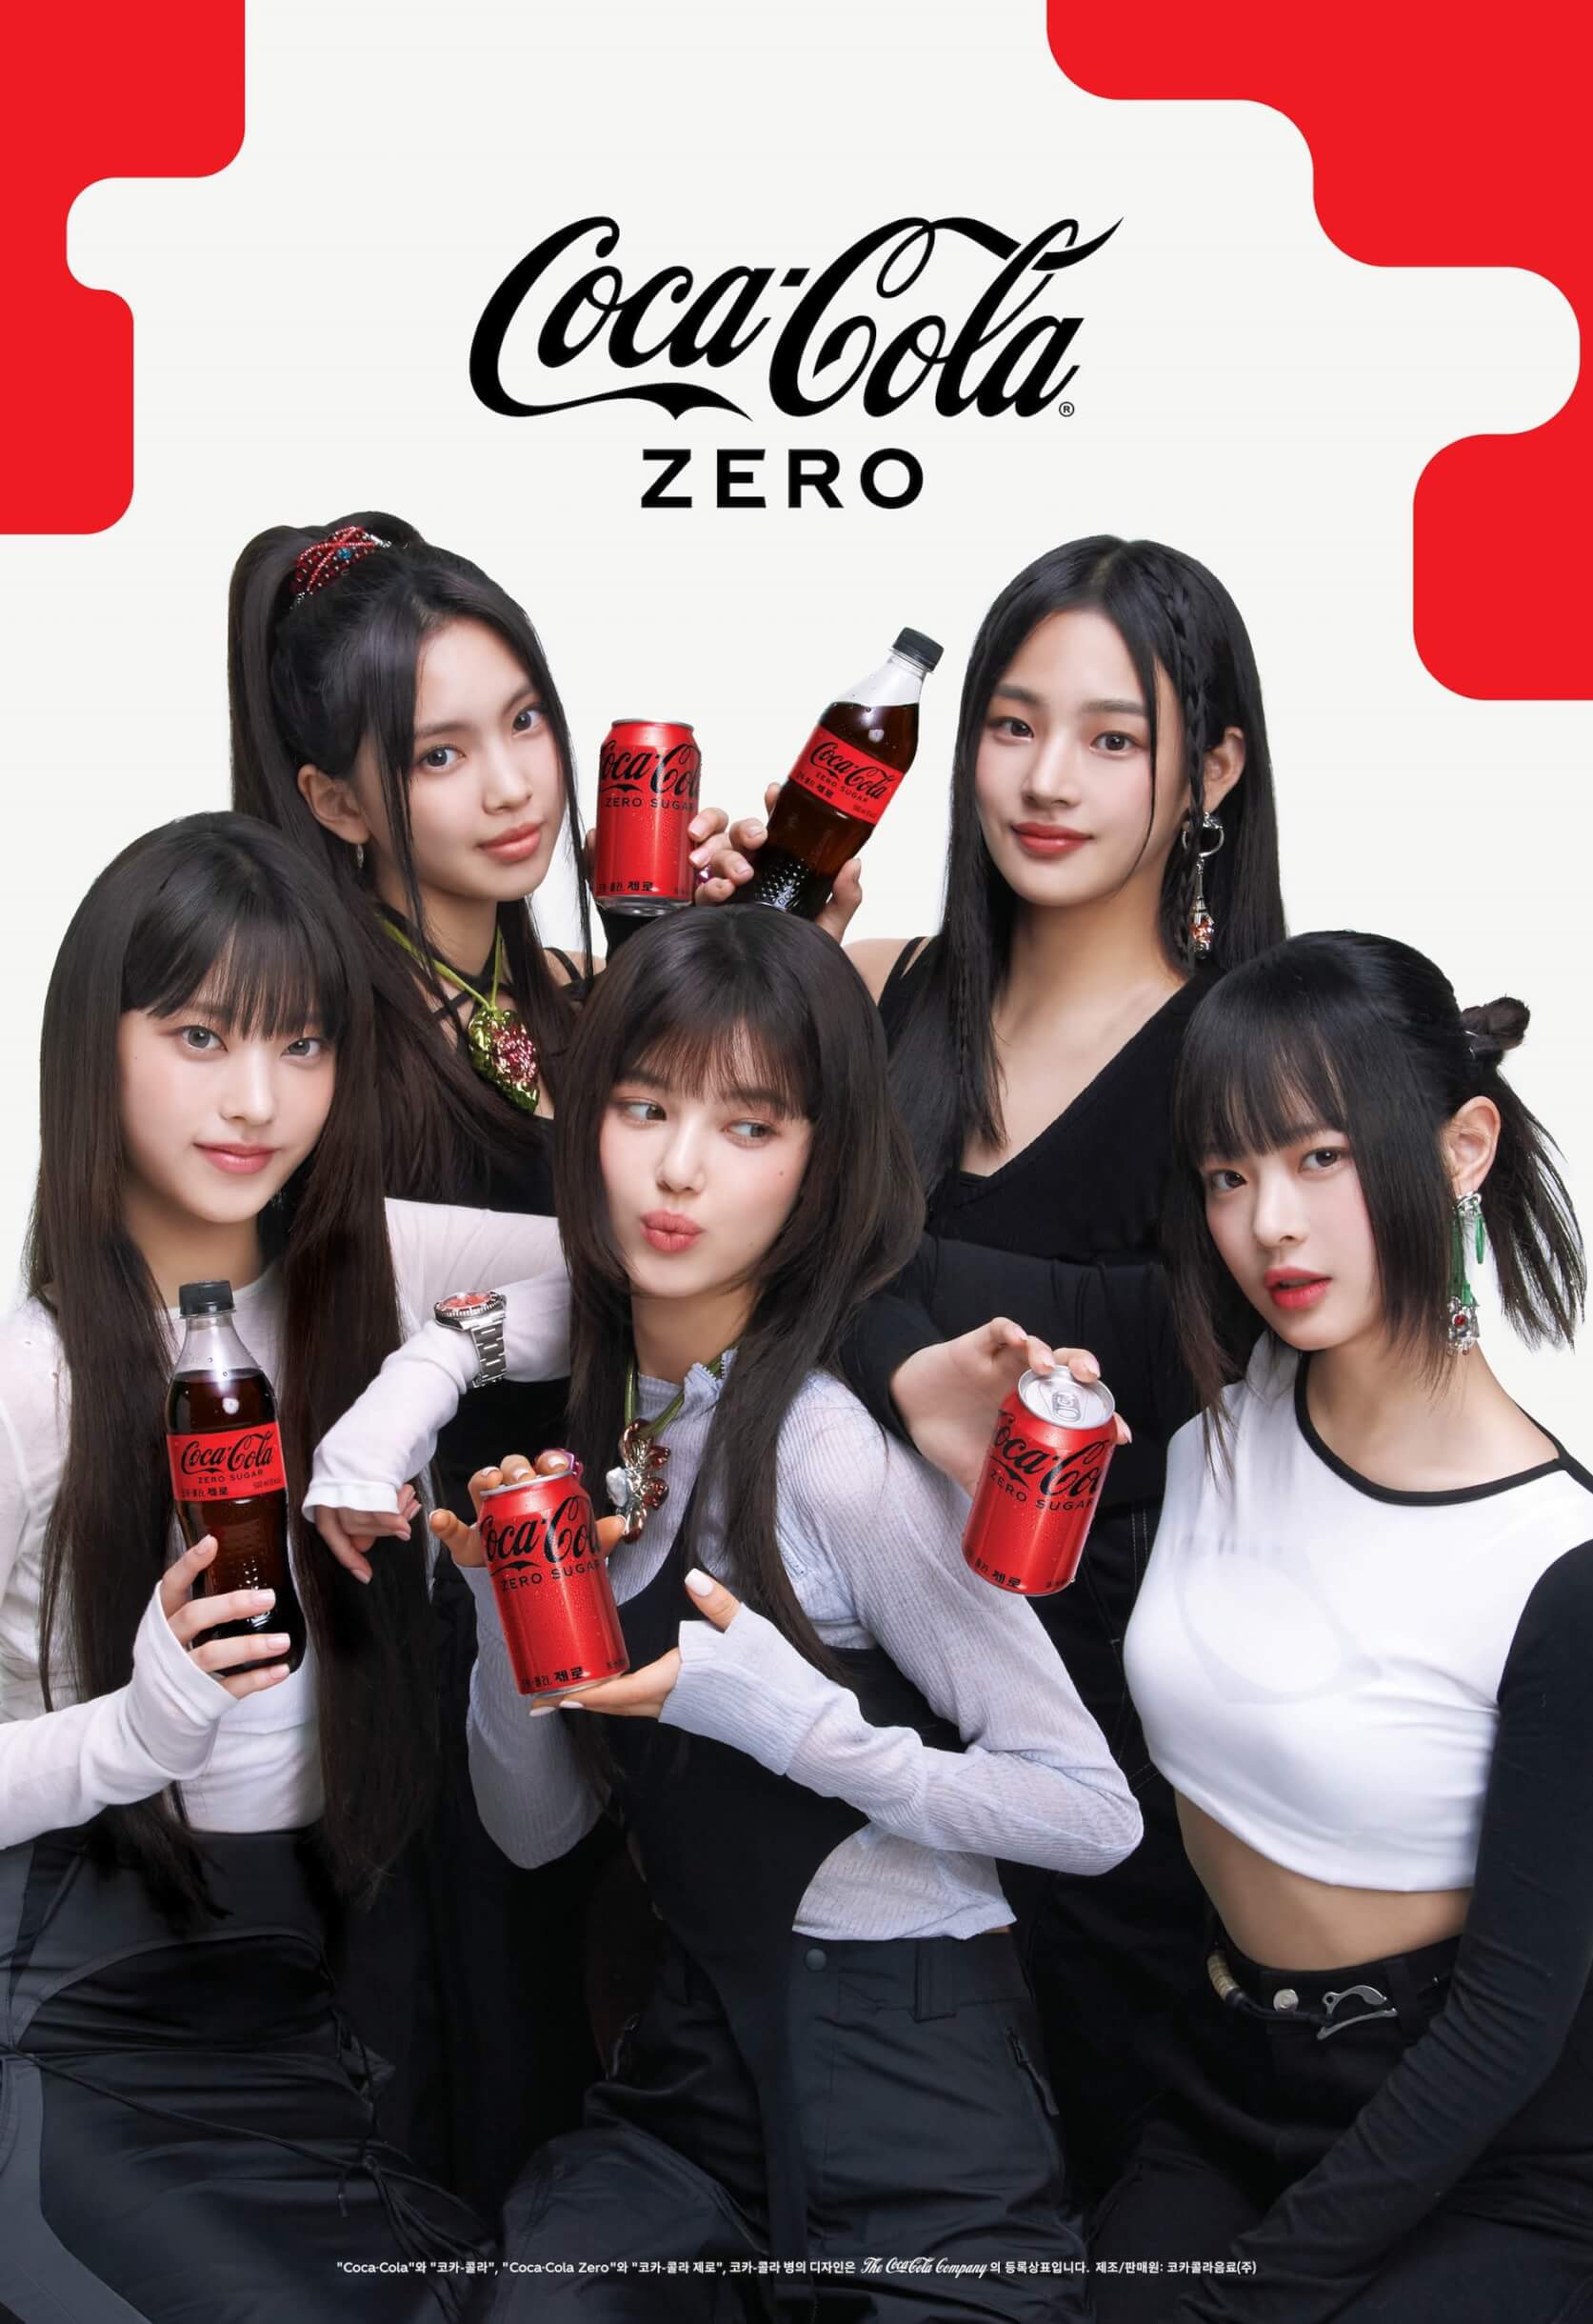 newjeans コカコーラ ポスター 非売品 韓国 限定 コカ・コーラ 